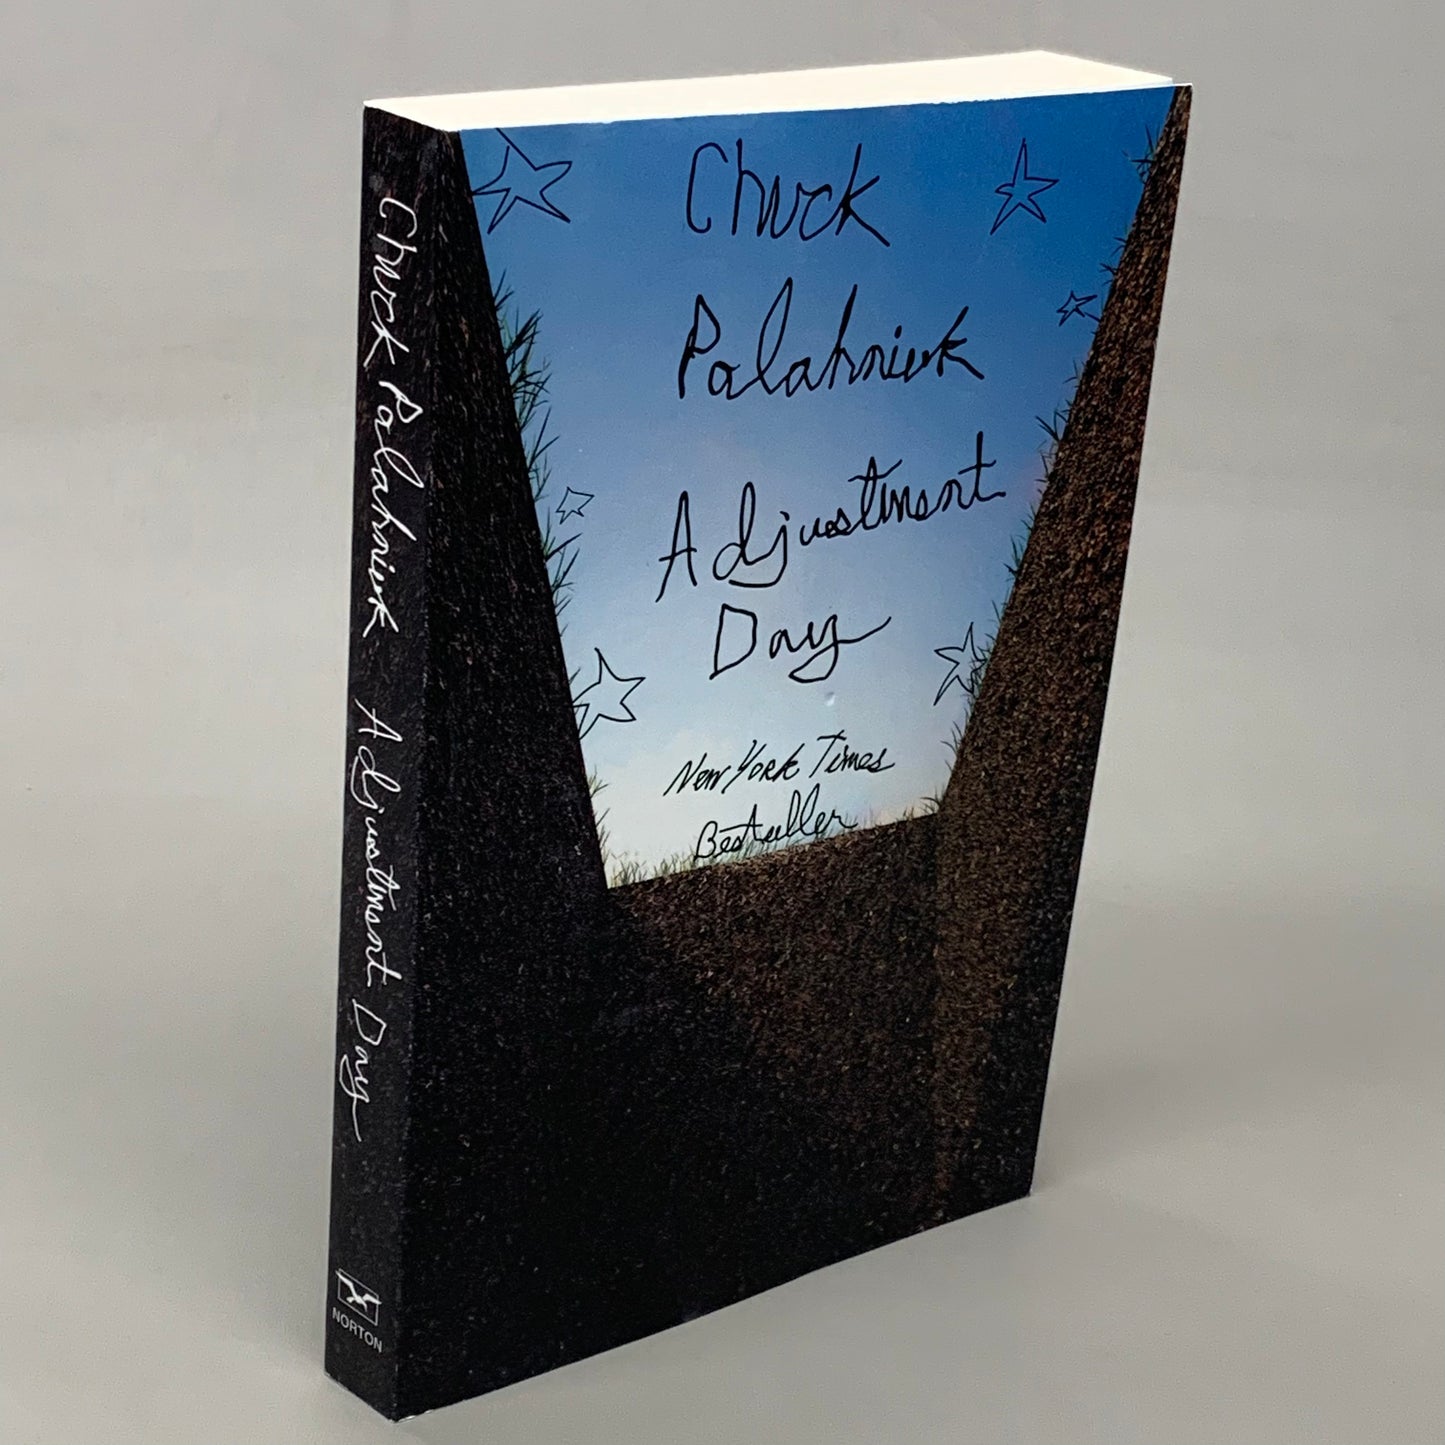 Adjustment Day: A Novel Paperback Book by Chuck Palahniuk (New)